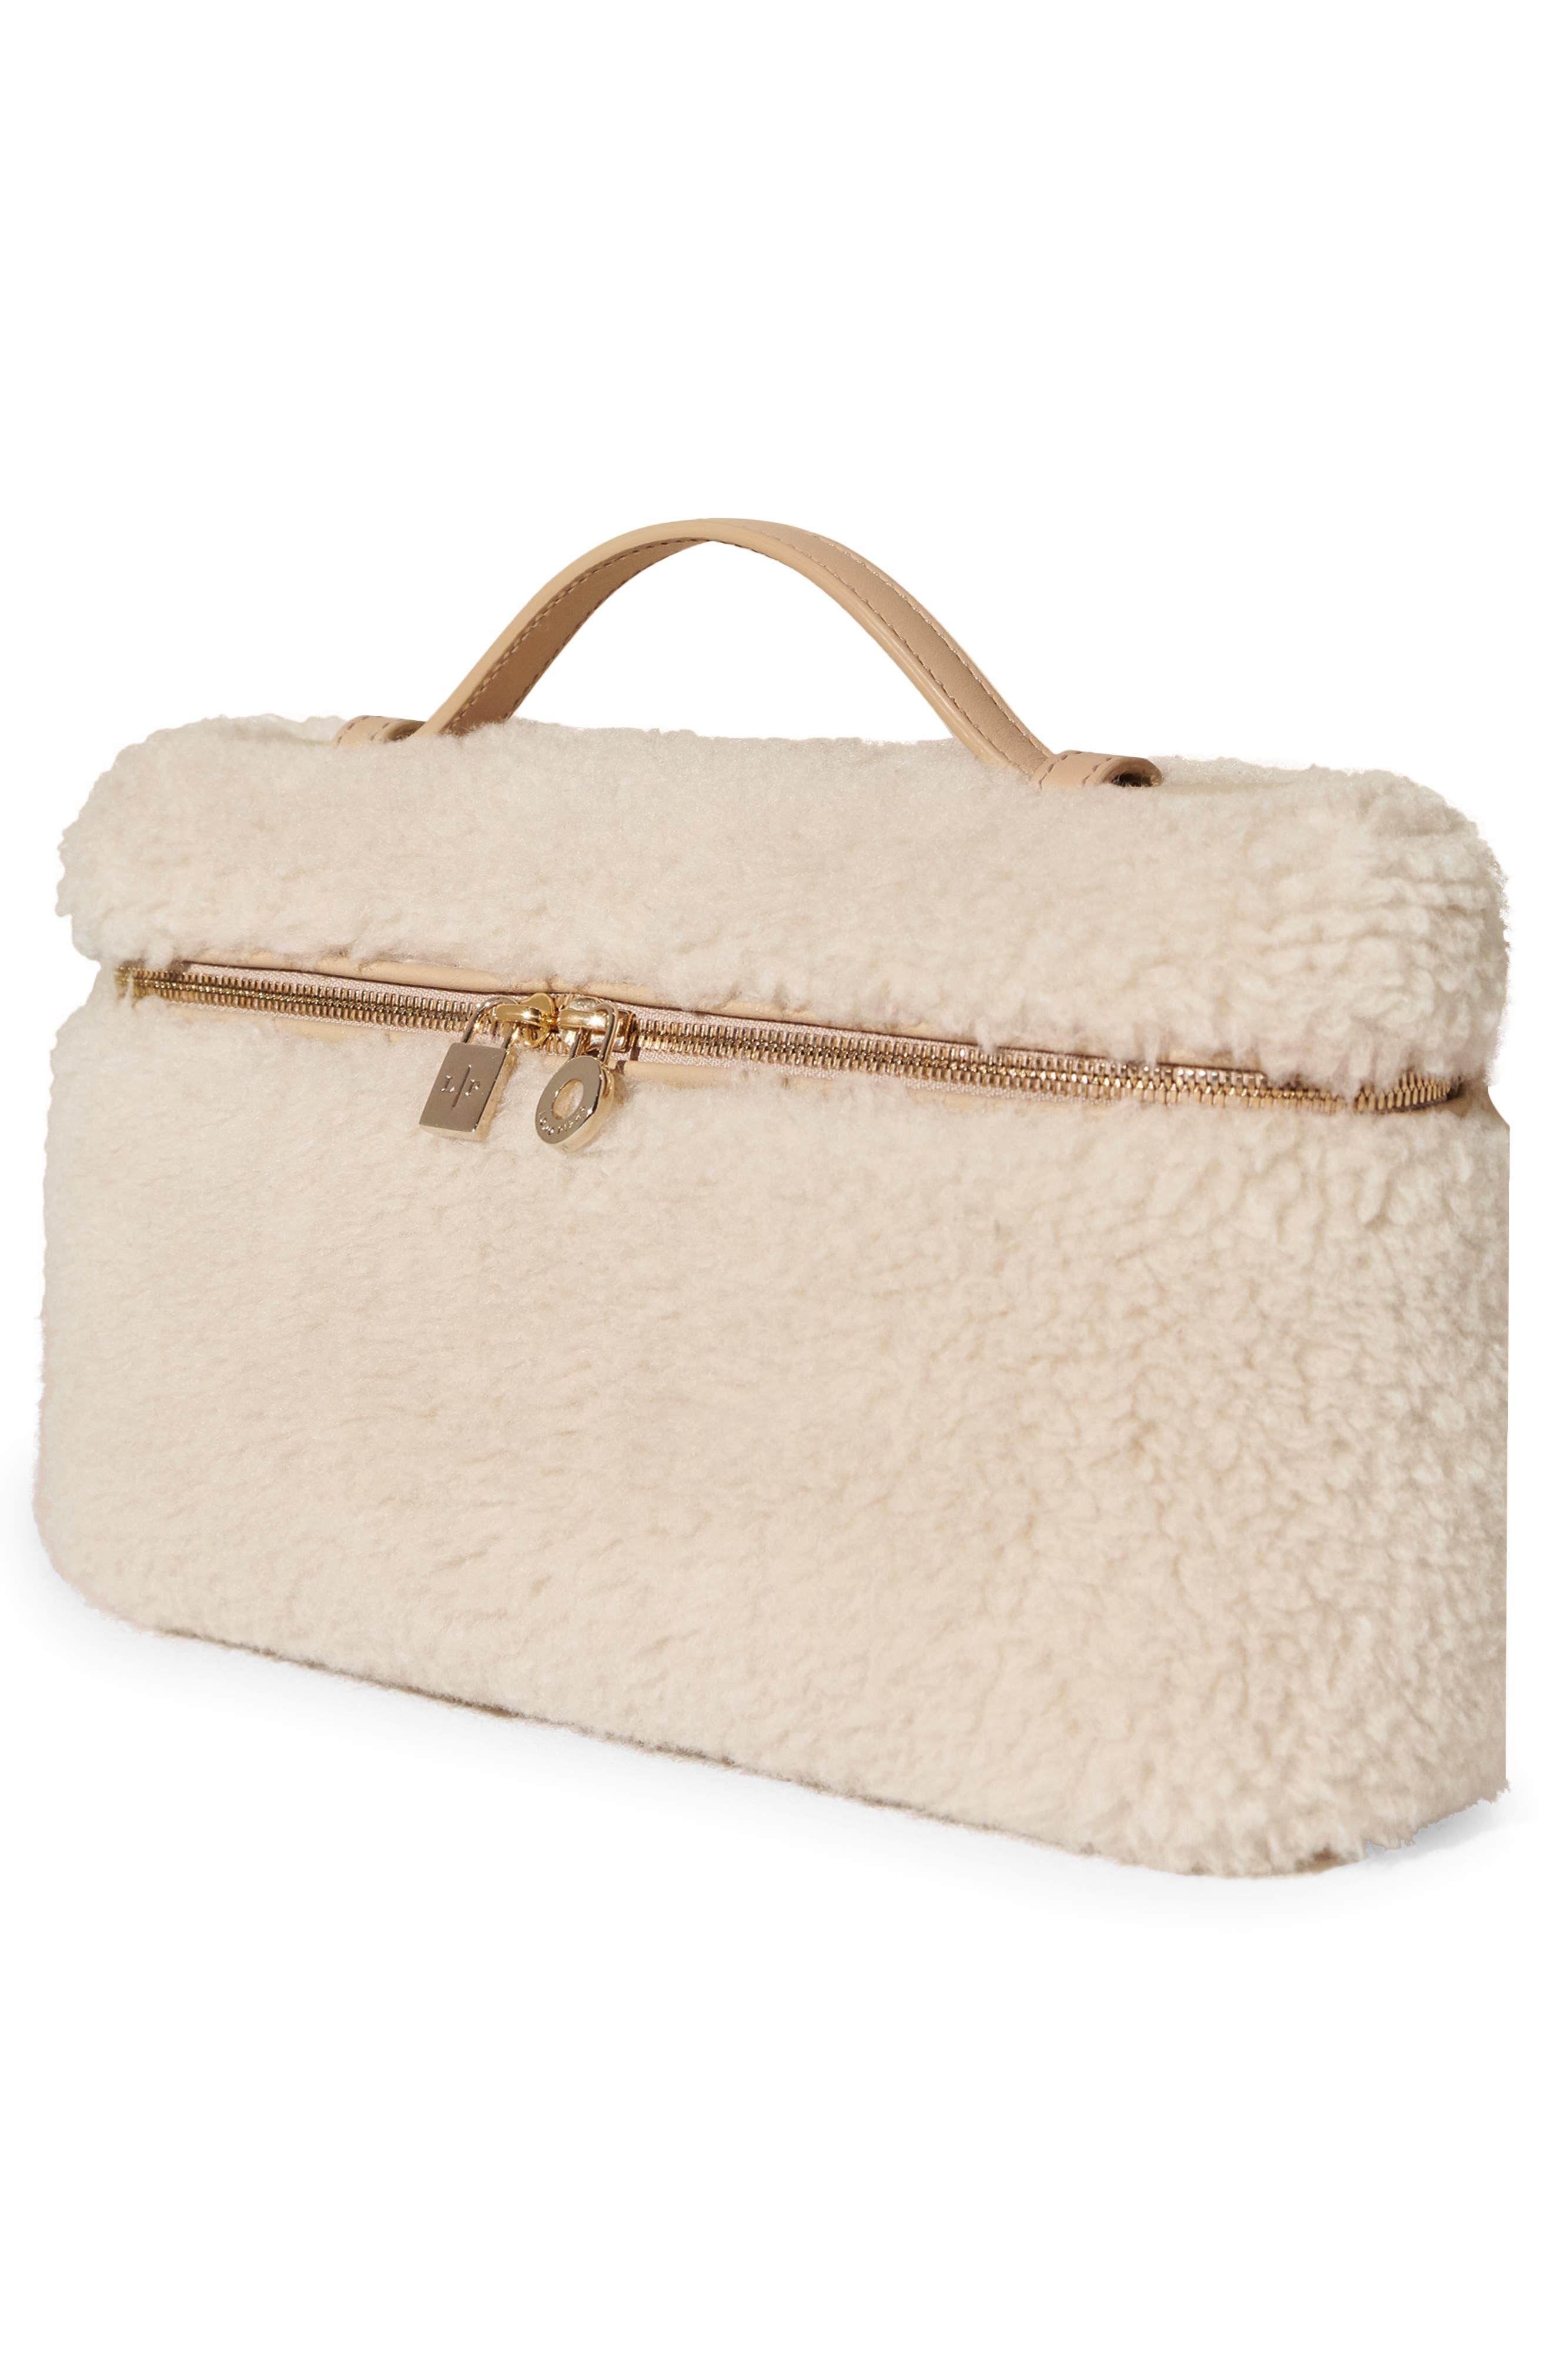 Stunning CHANEL 22P Mini Pink Rectangular Flap Bag with Top Handle Gold  Hardware | eBay